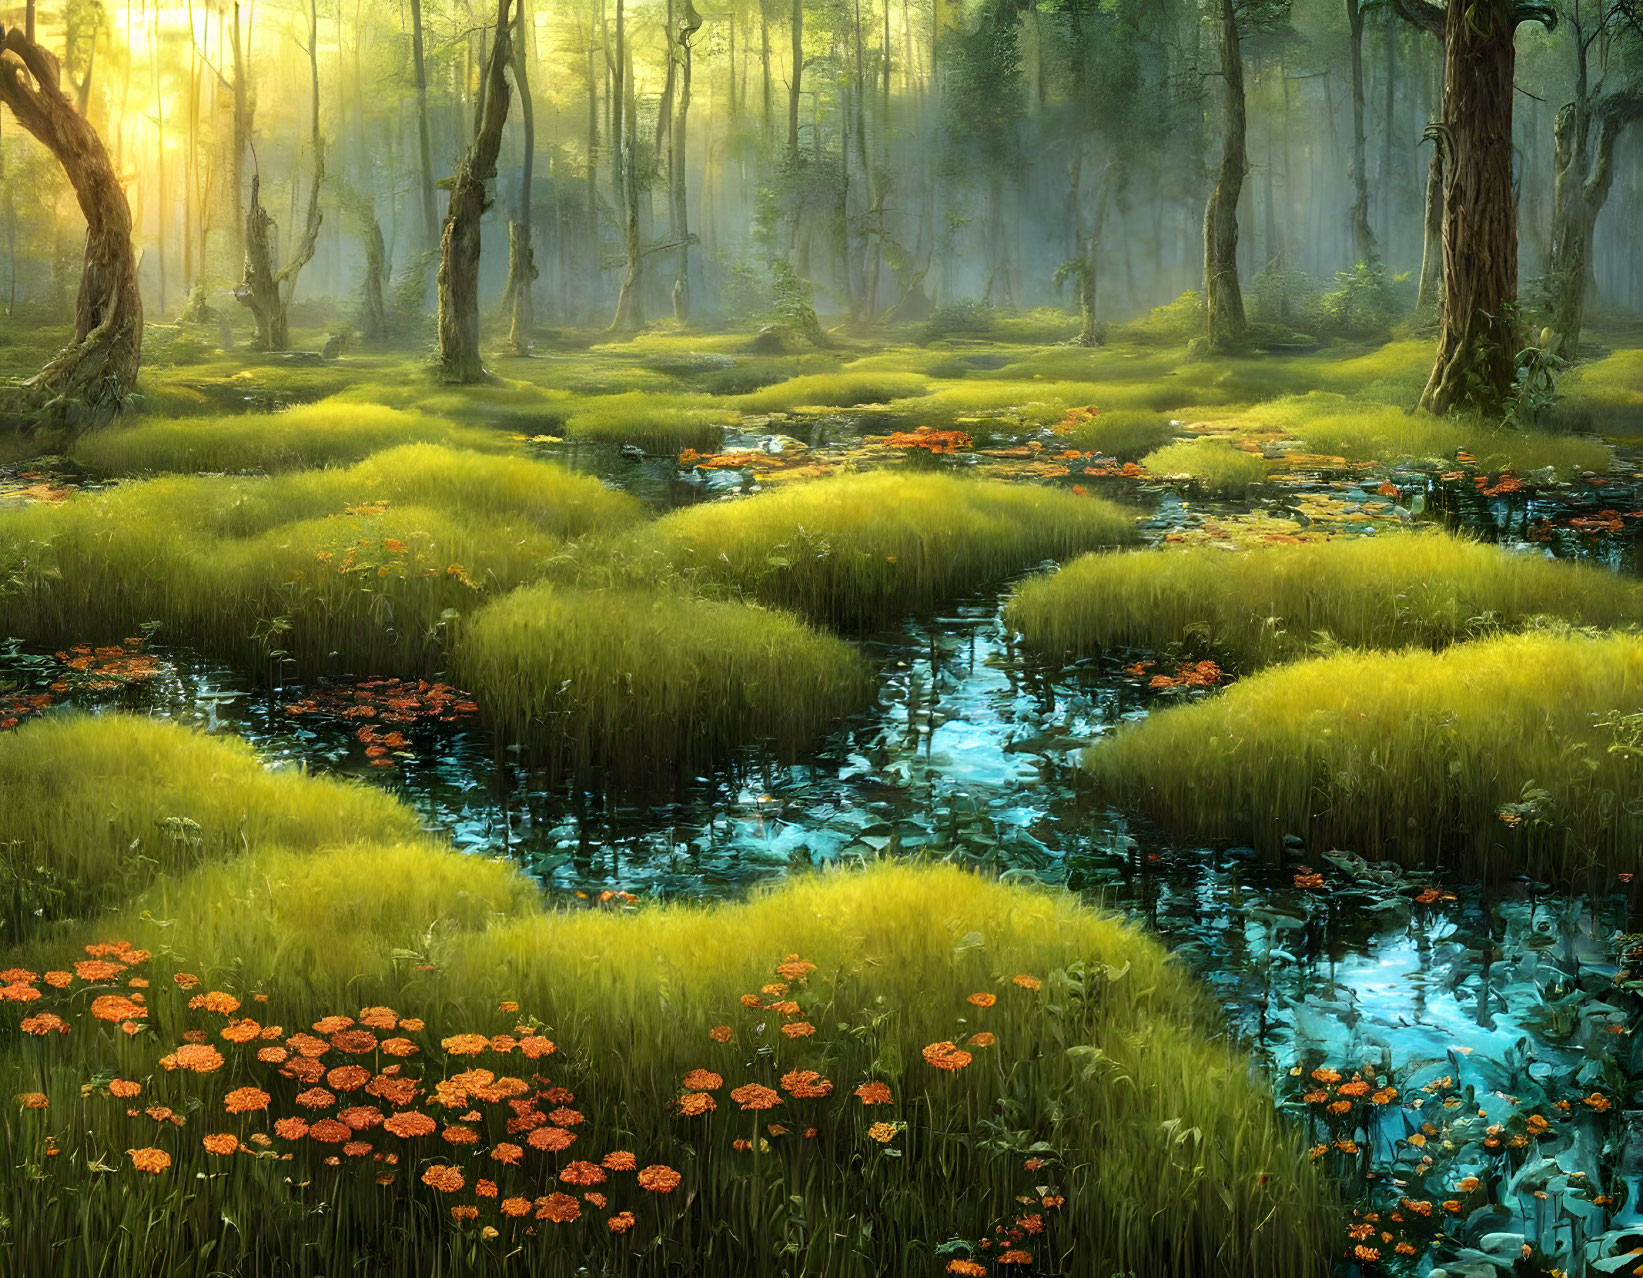 Sunlit Forest Swamp with Green Hummocks & Orange Flowers